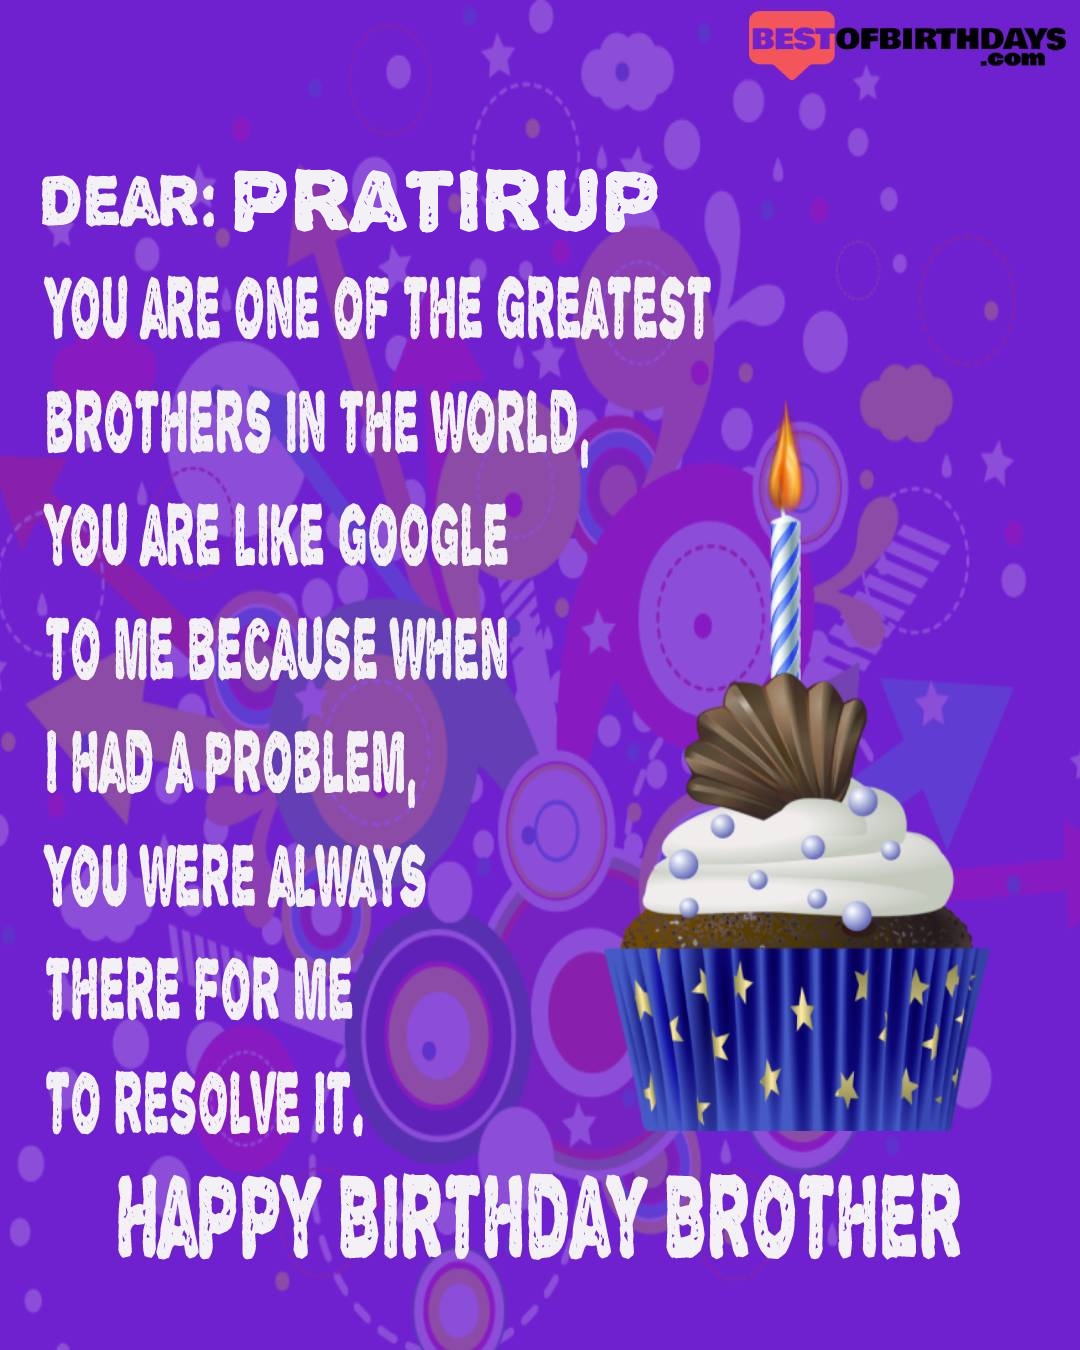 Happy birthday pratirup bhai brother bro